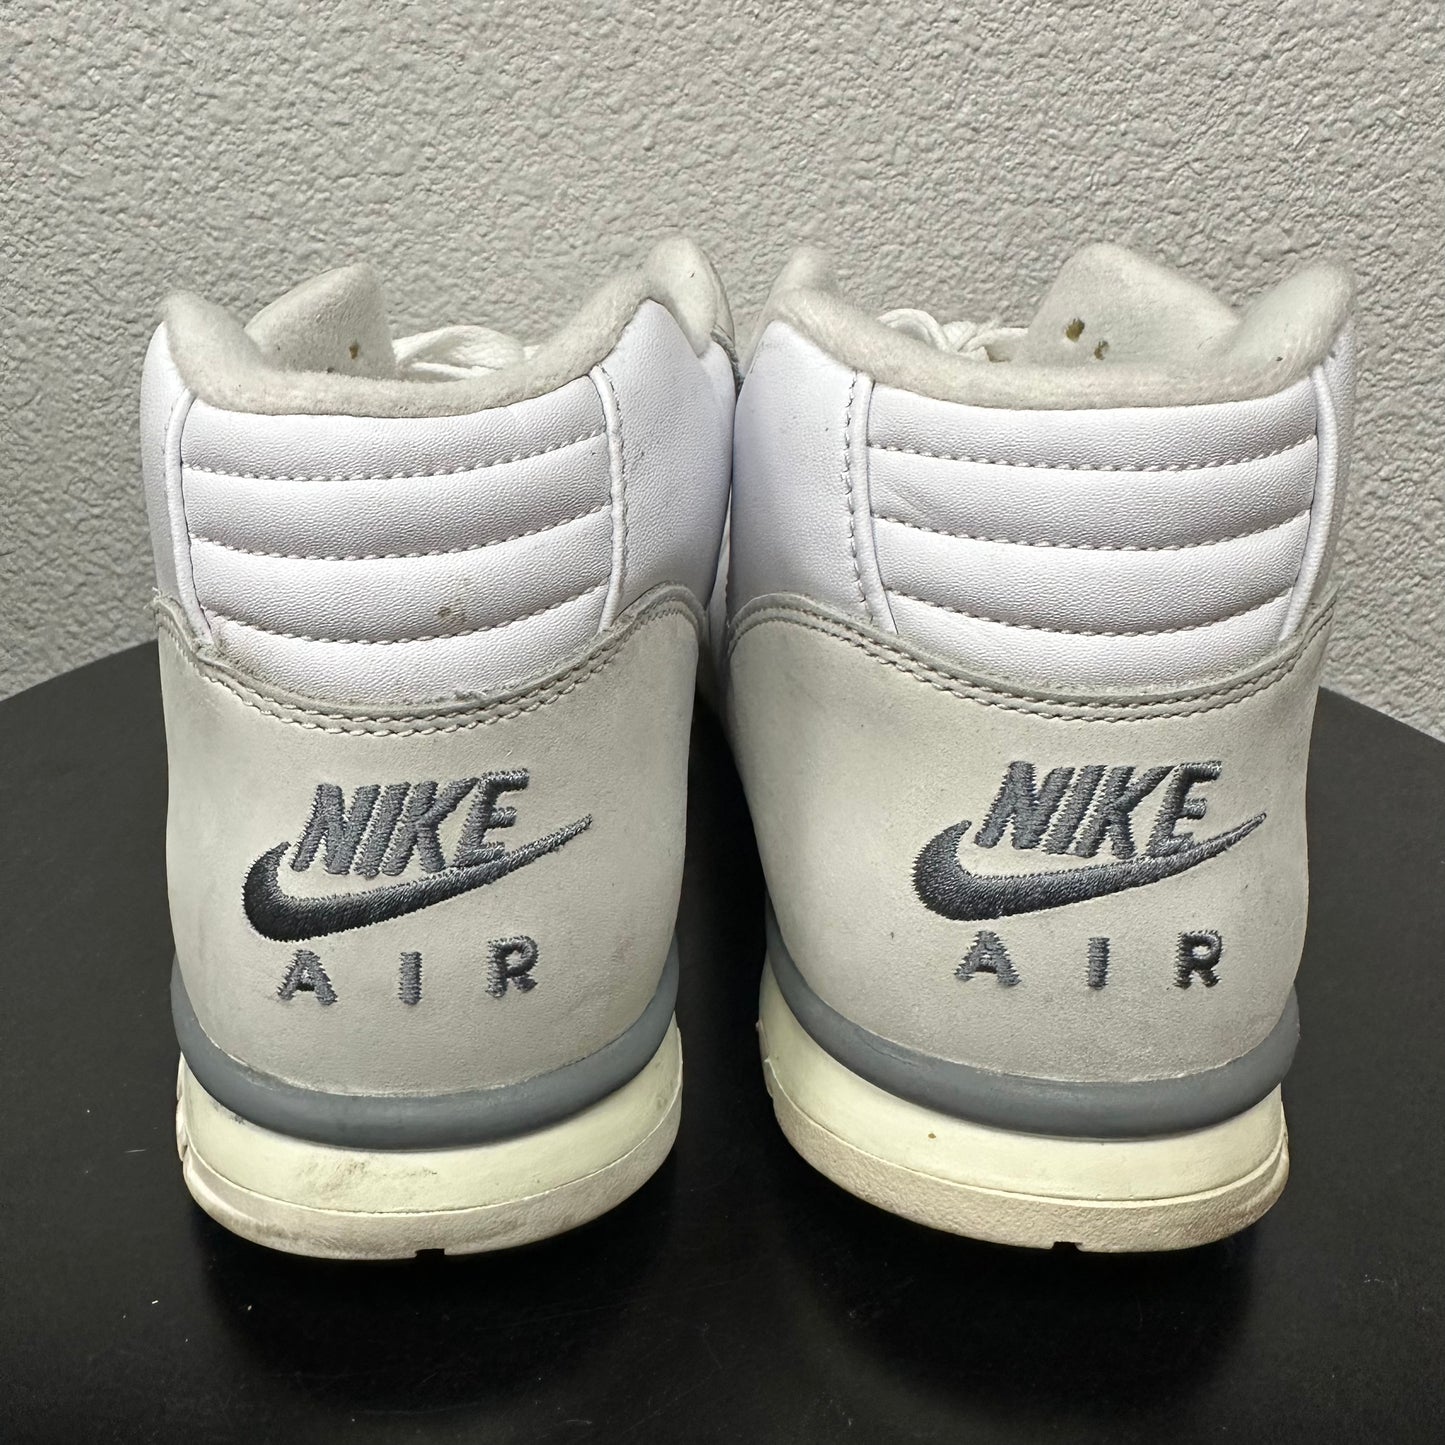 Nike Air Trainer 3 White / Grey